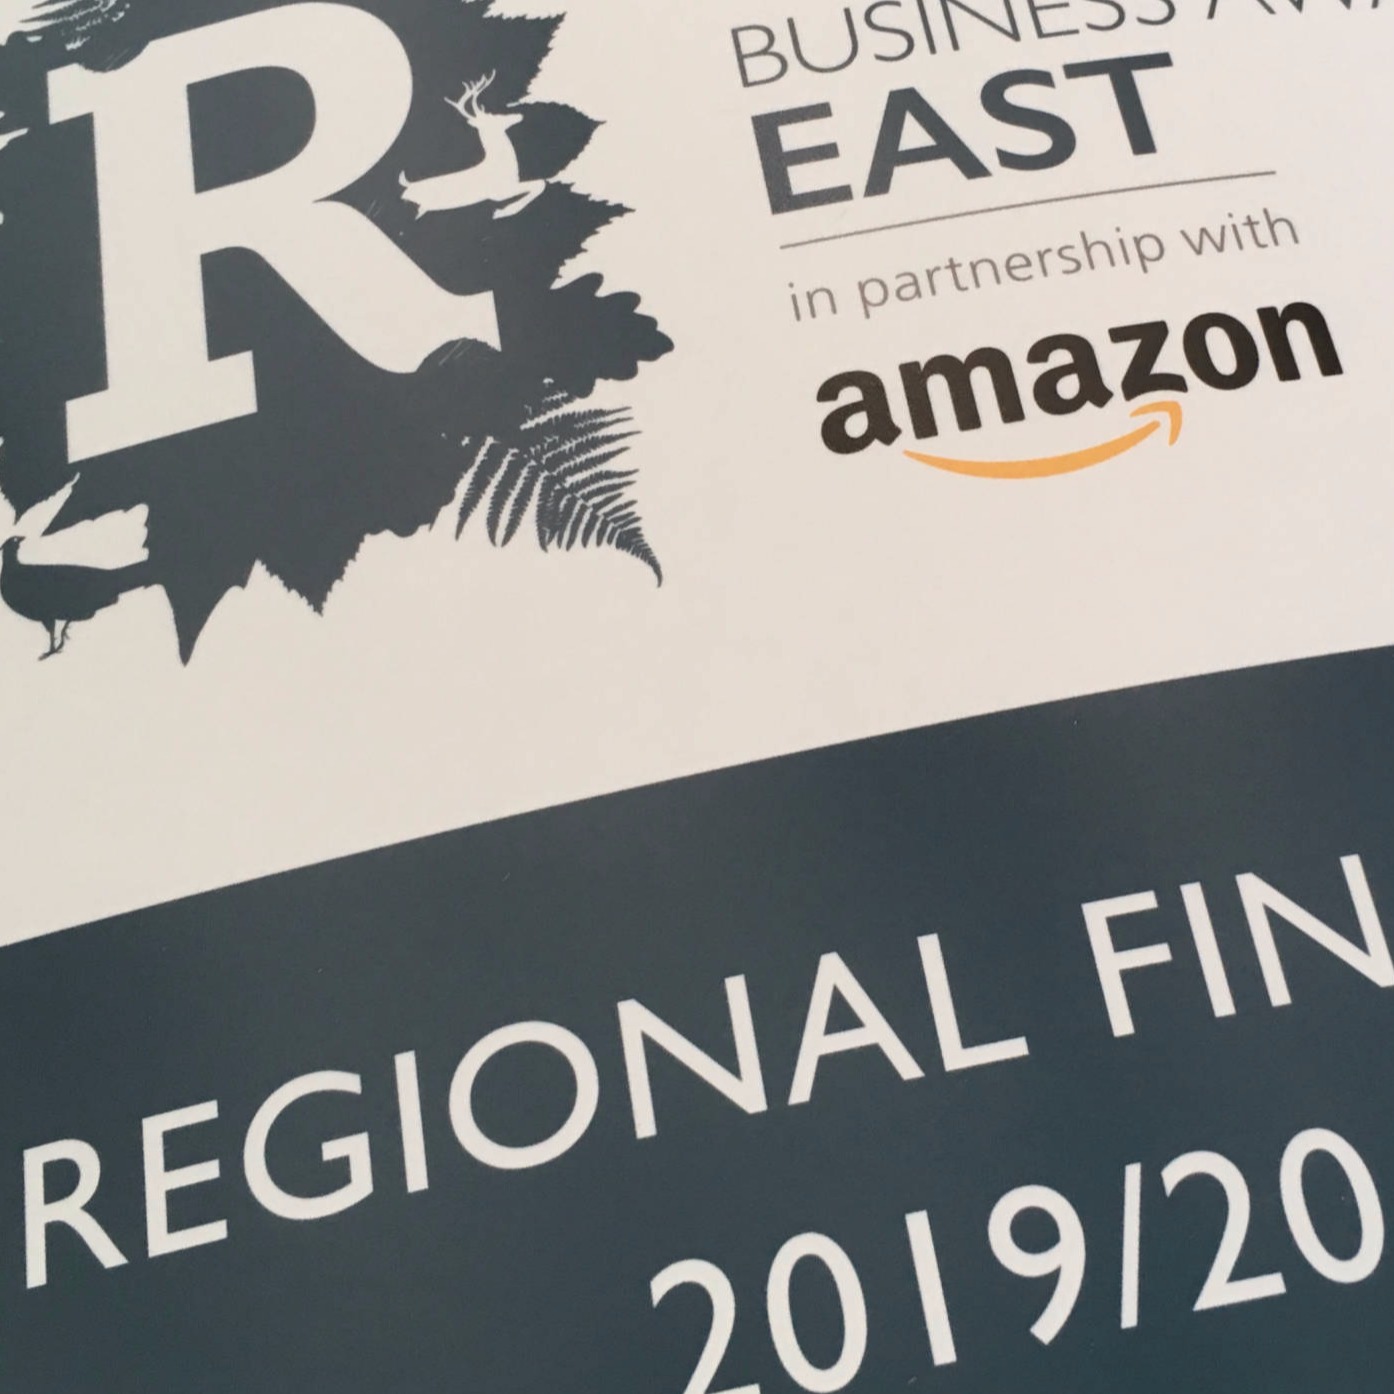 Regional Winner Rural Business Awards 2019